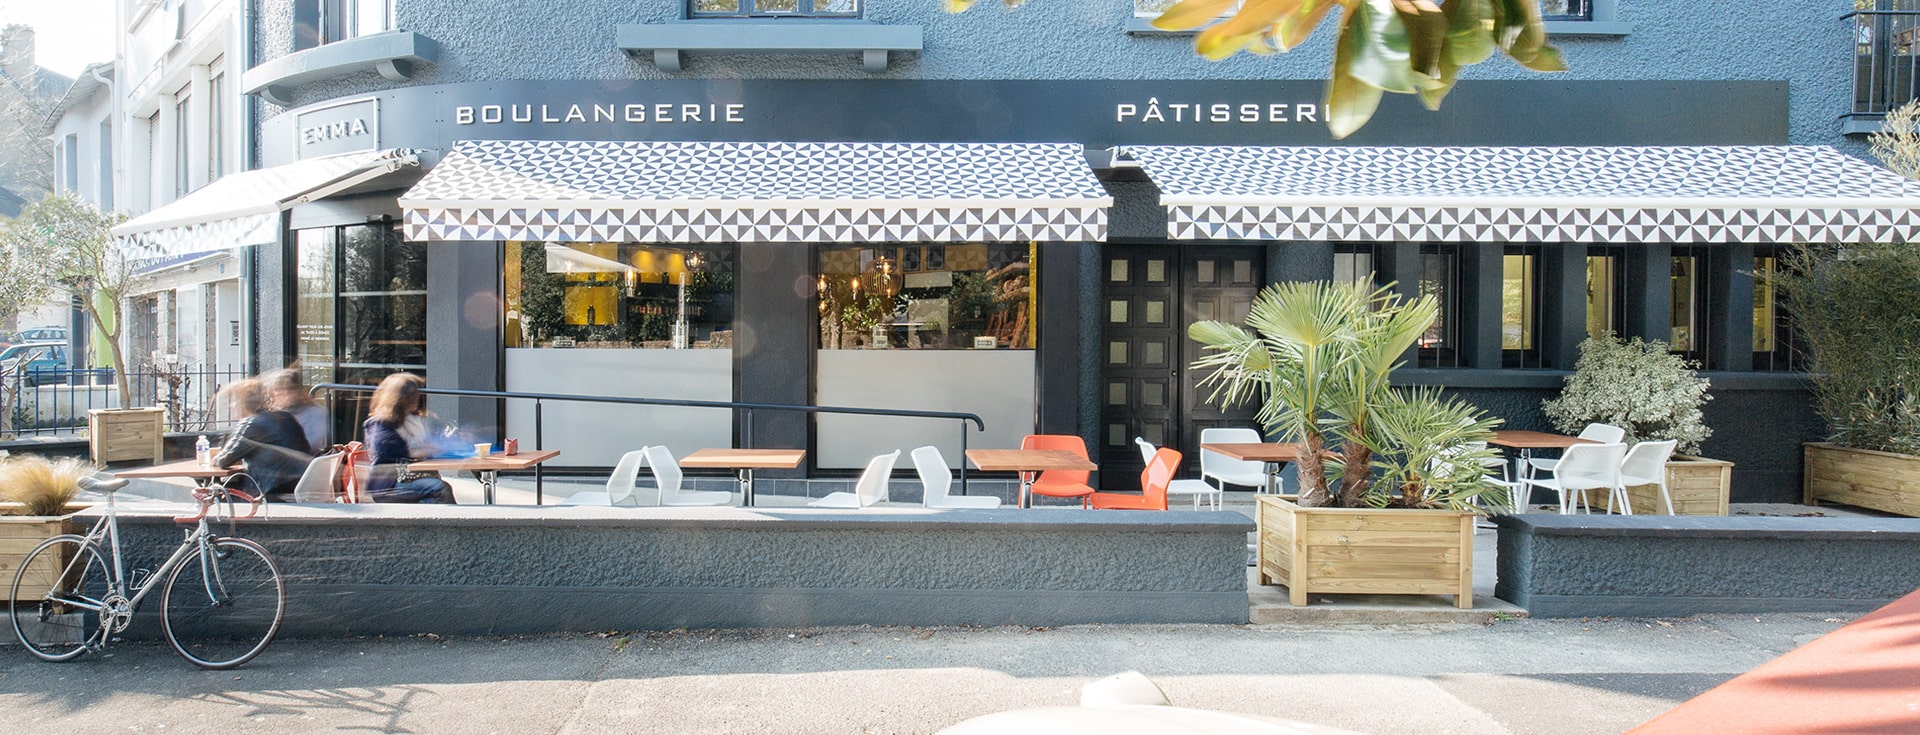 Store Banne Antibes - Boulangerie Emma à Nantes (44) par Espacio